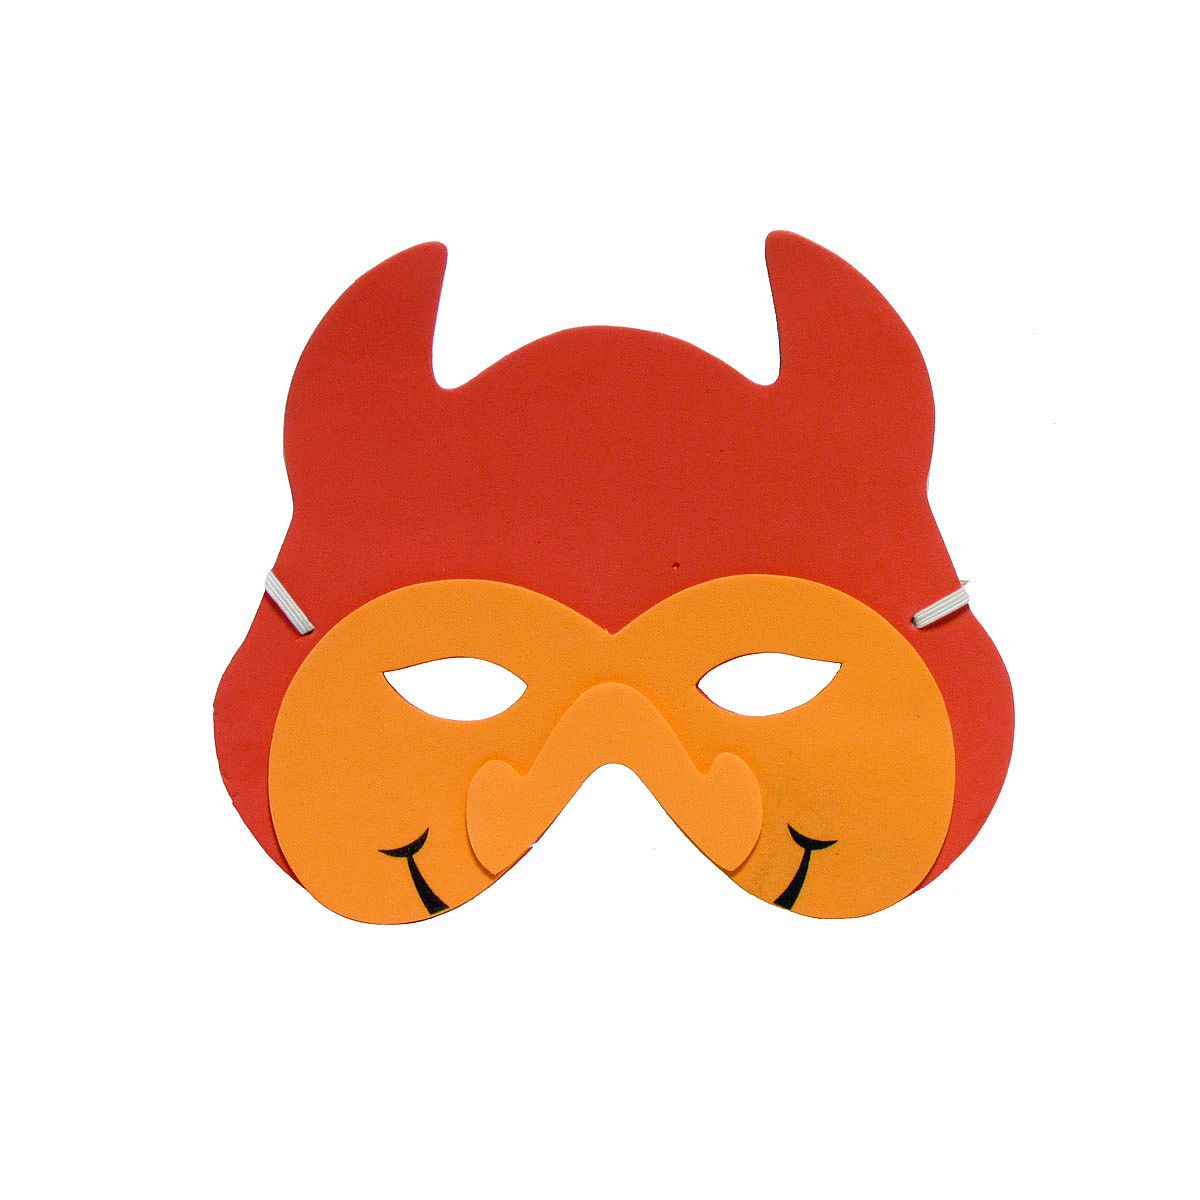 Maska piankowa Halloween Arpex (HA1339)